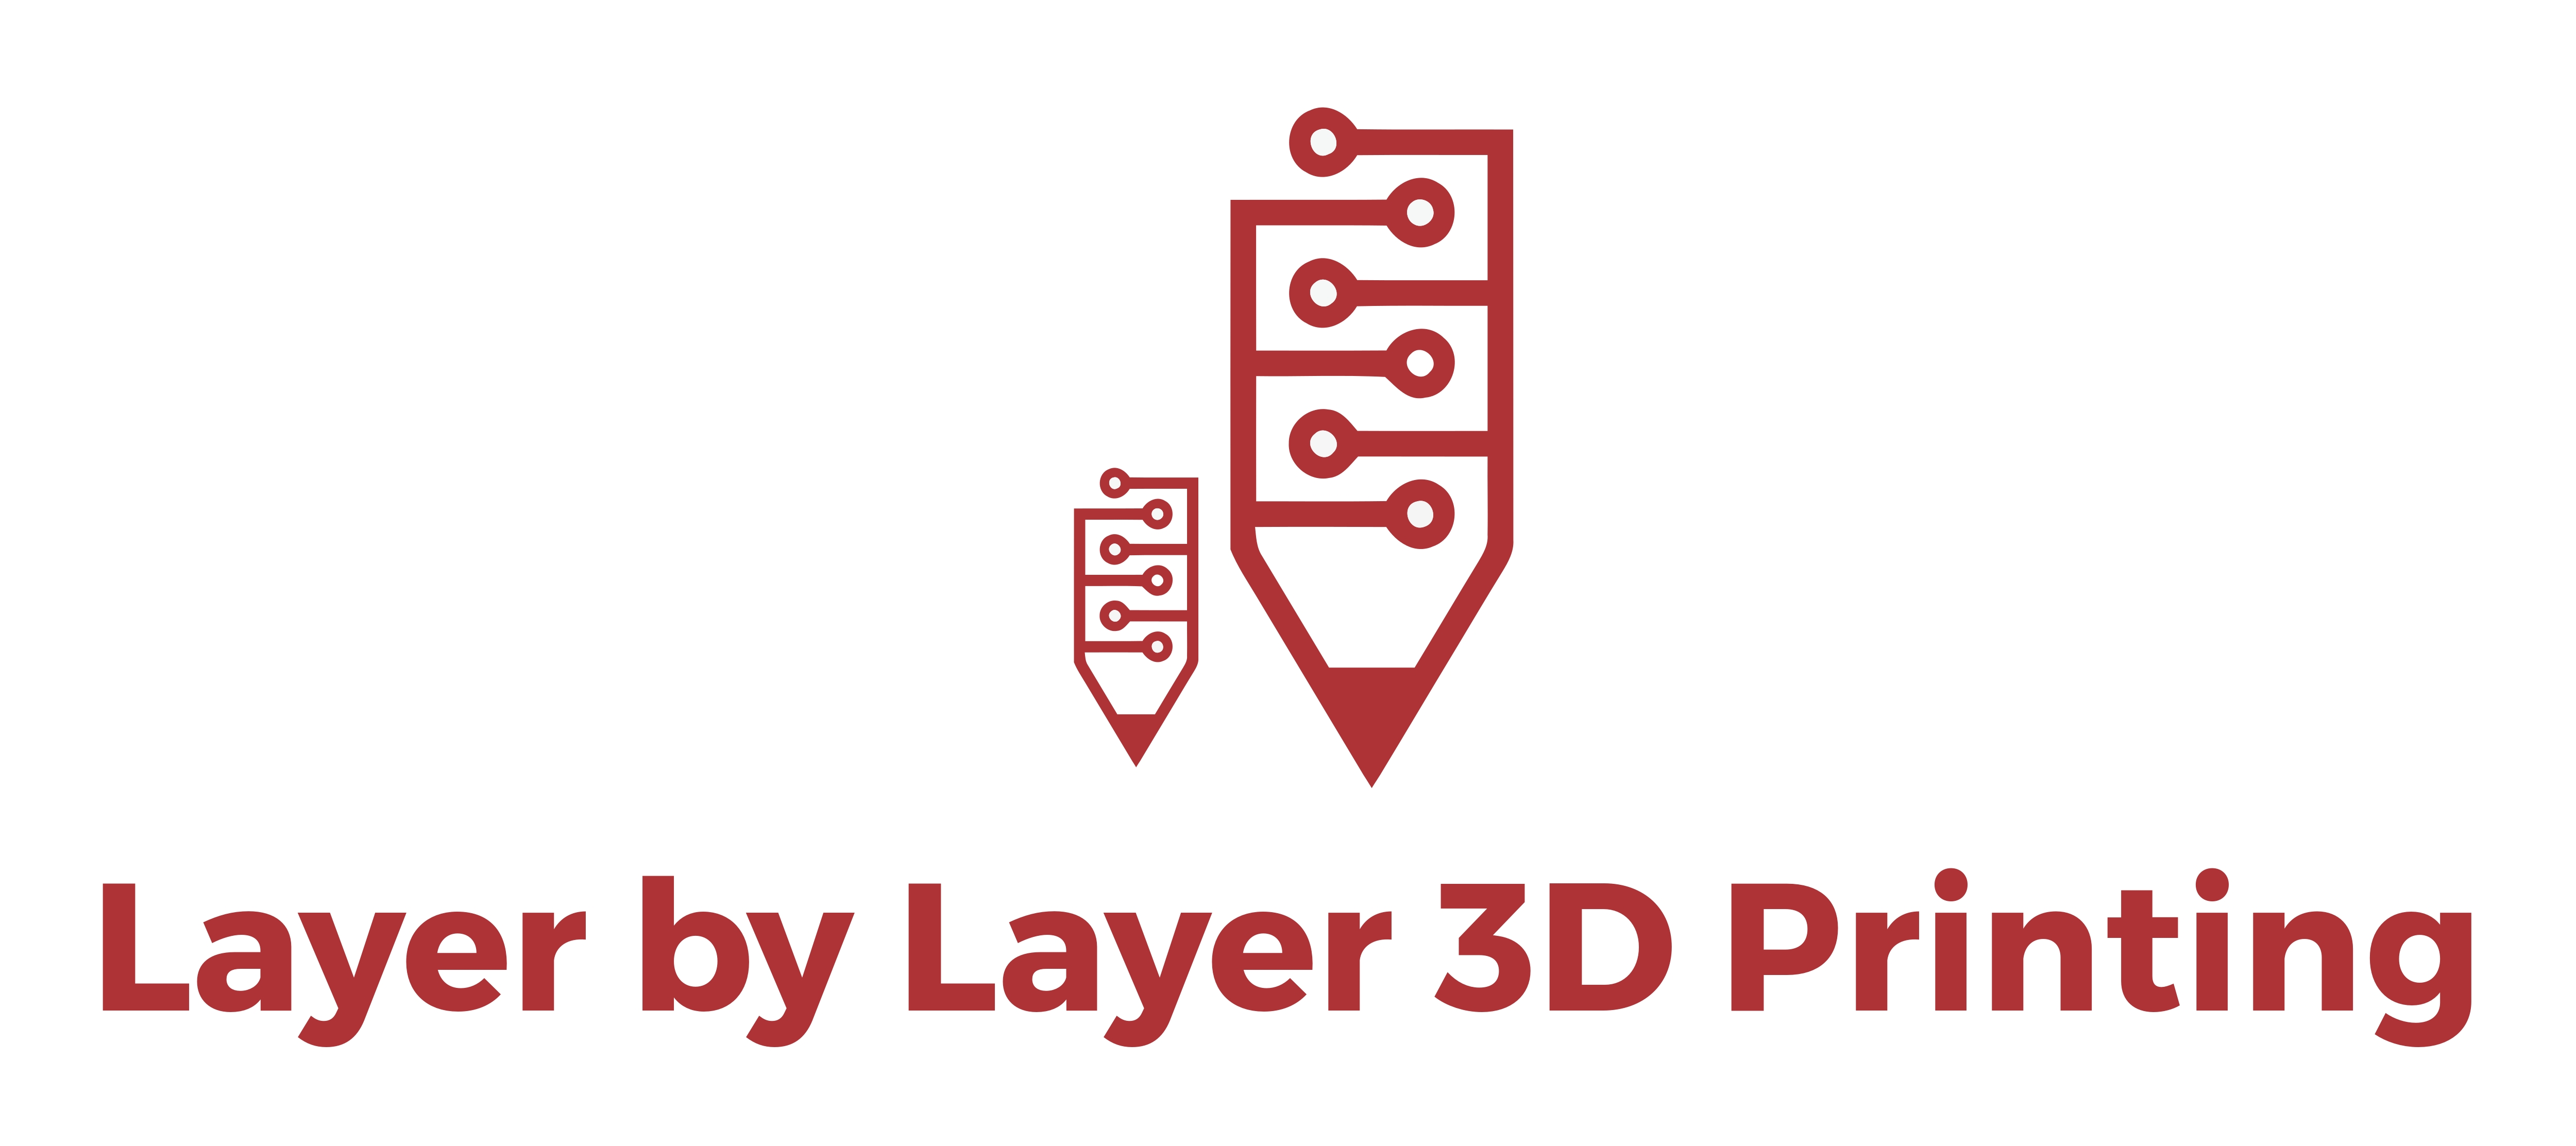 Layer by Layer 3D Printing, LLC